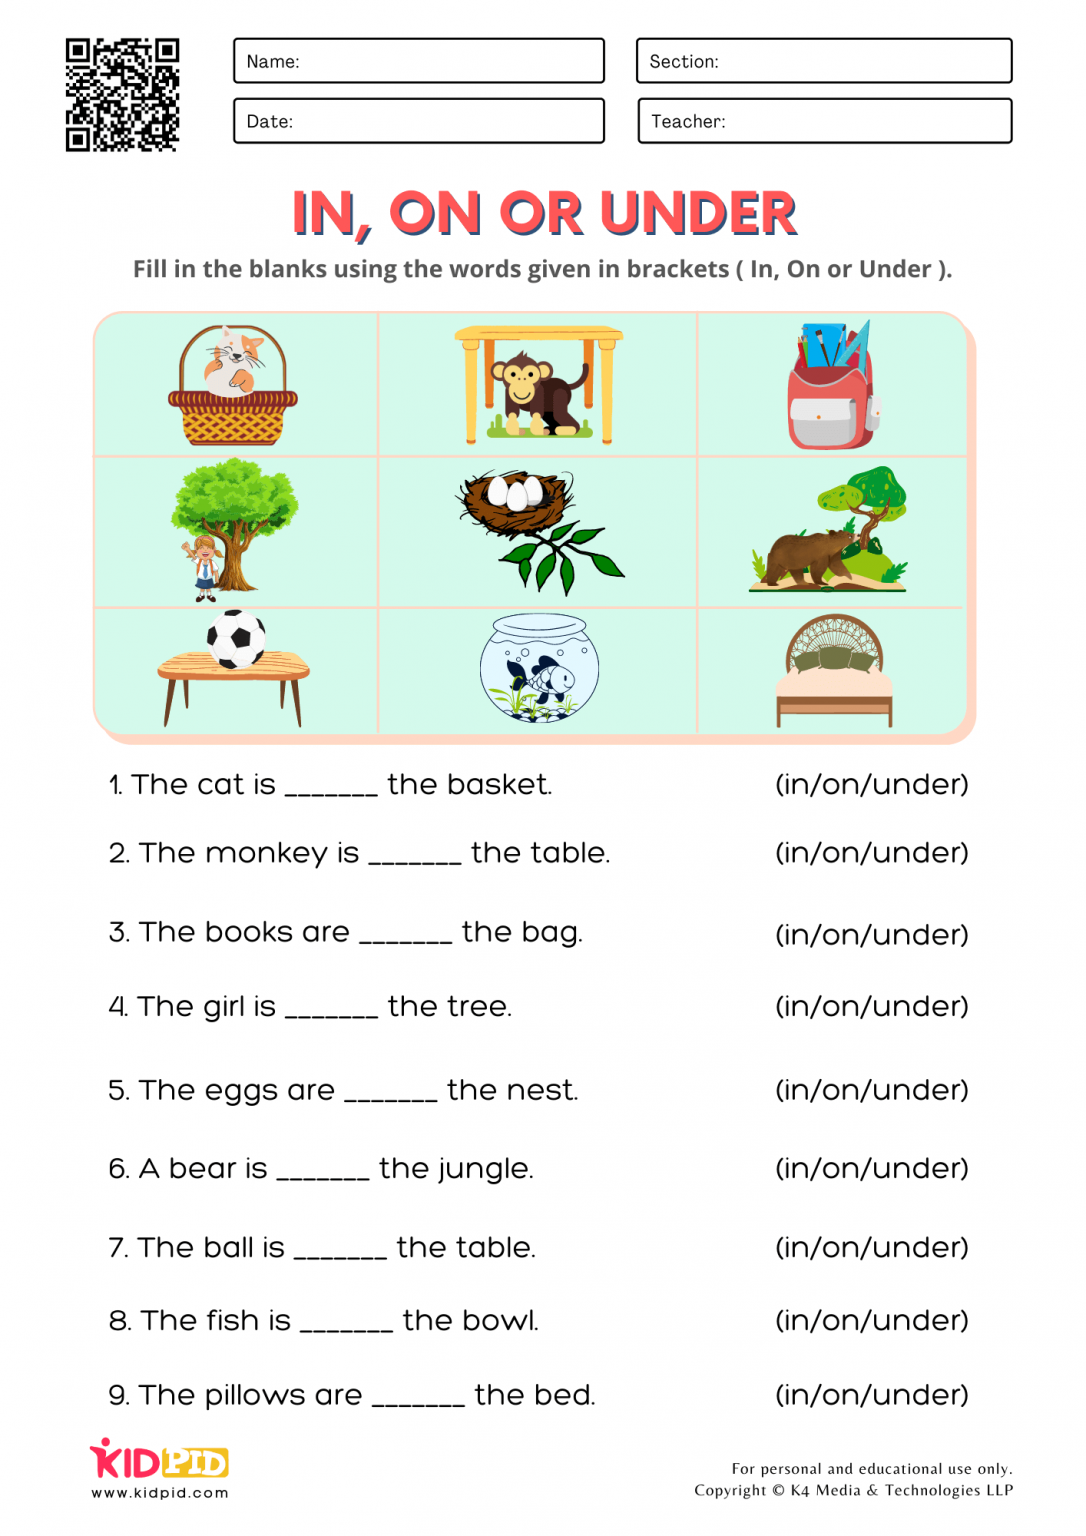 Preposition Worksheets For Kindergarten Kidpid